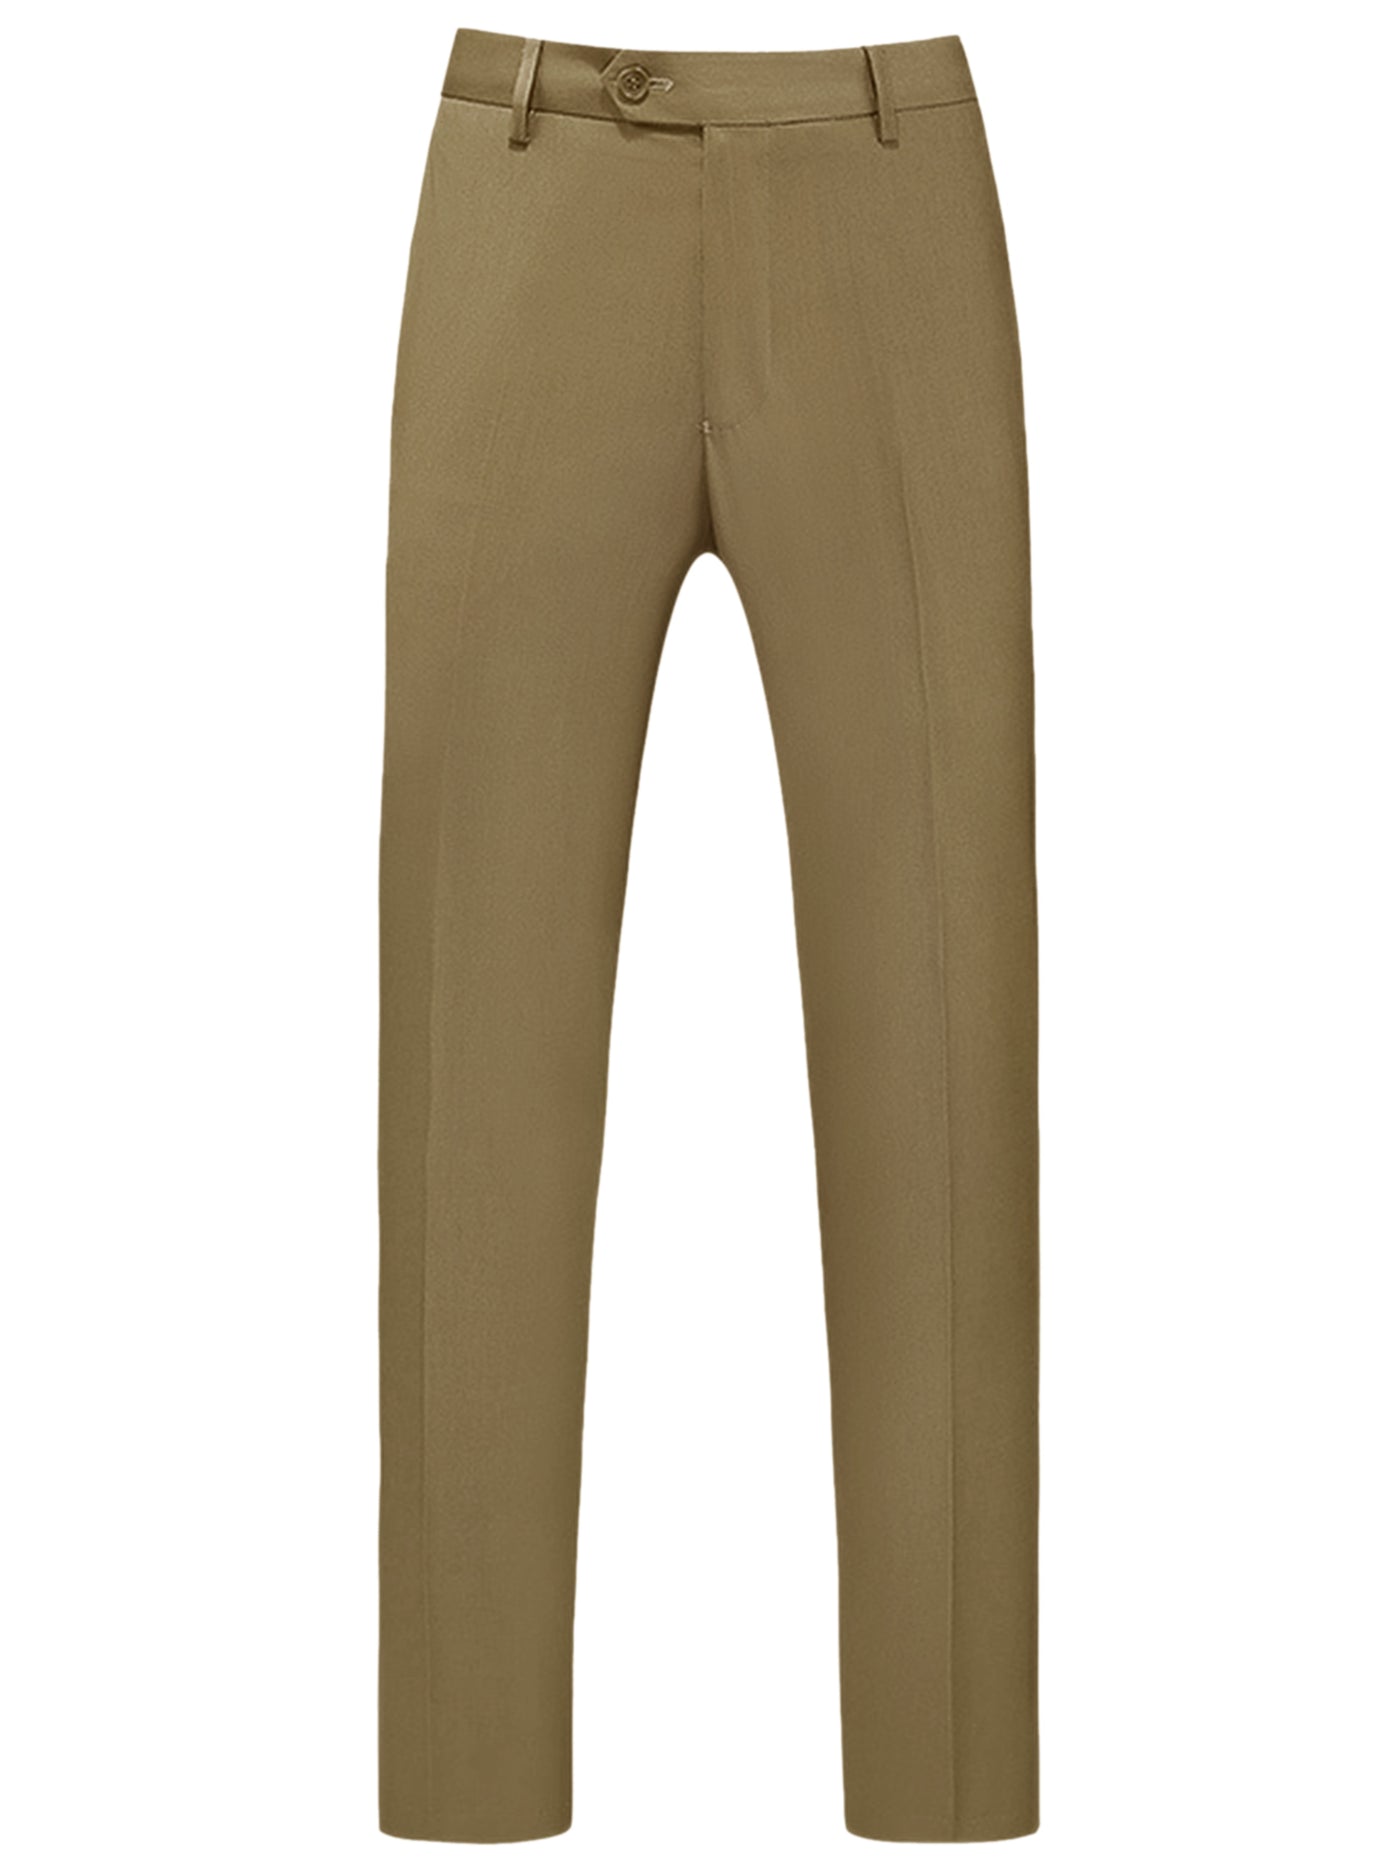 Bublédon Men's Classic Fit Comfort Stretch Flat Front Dress Chino Pants